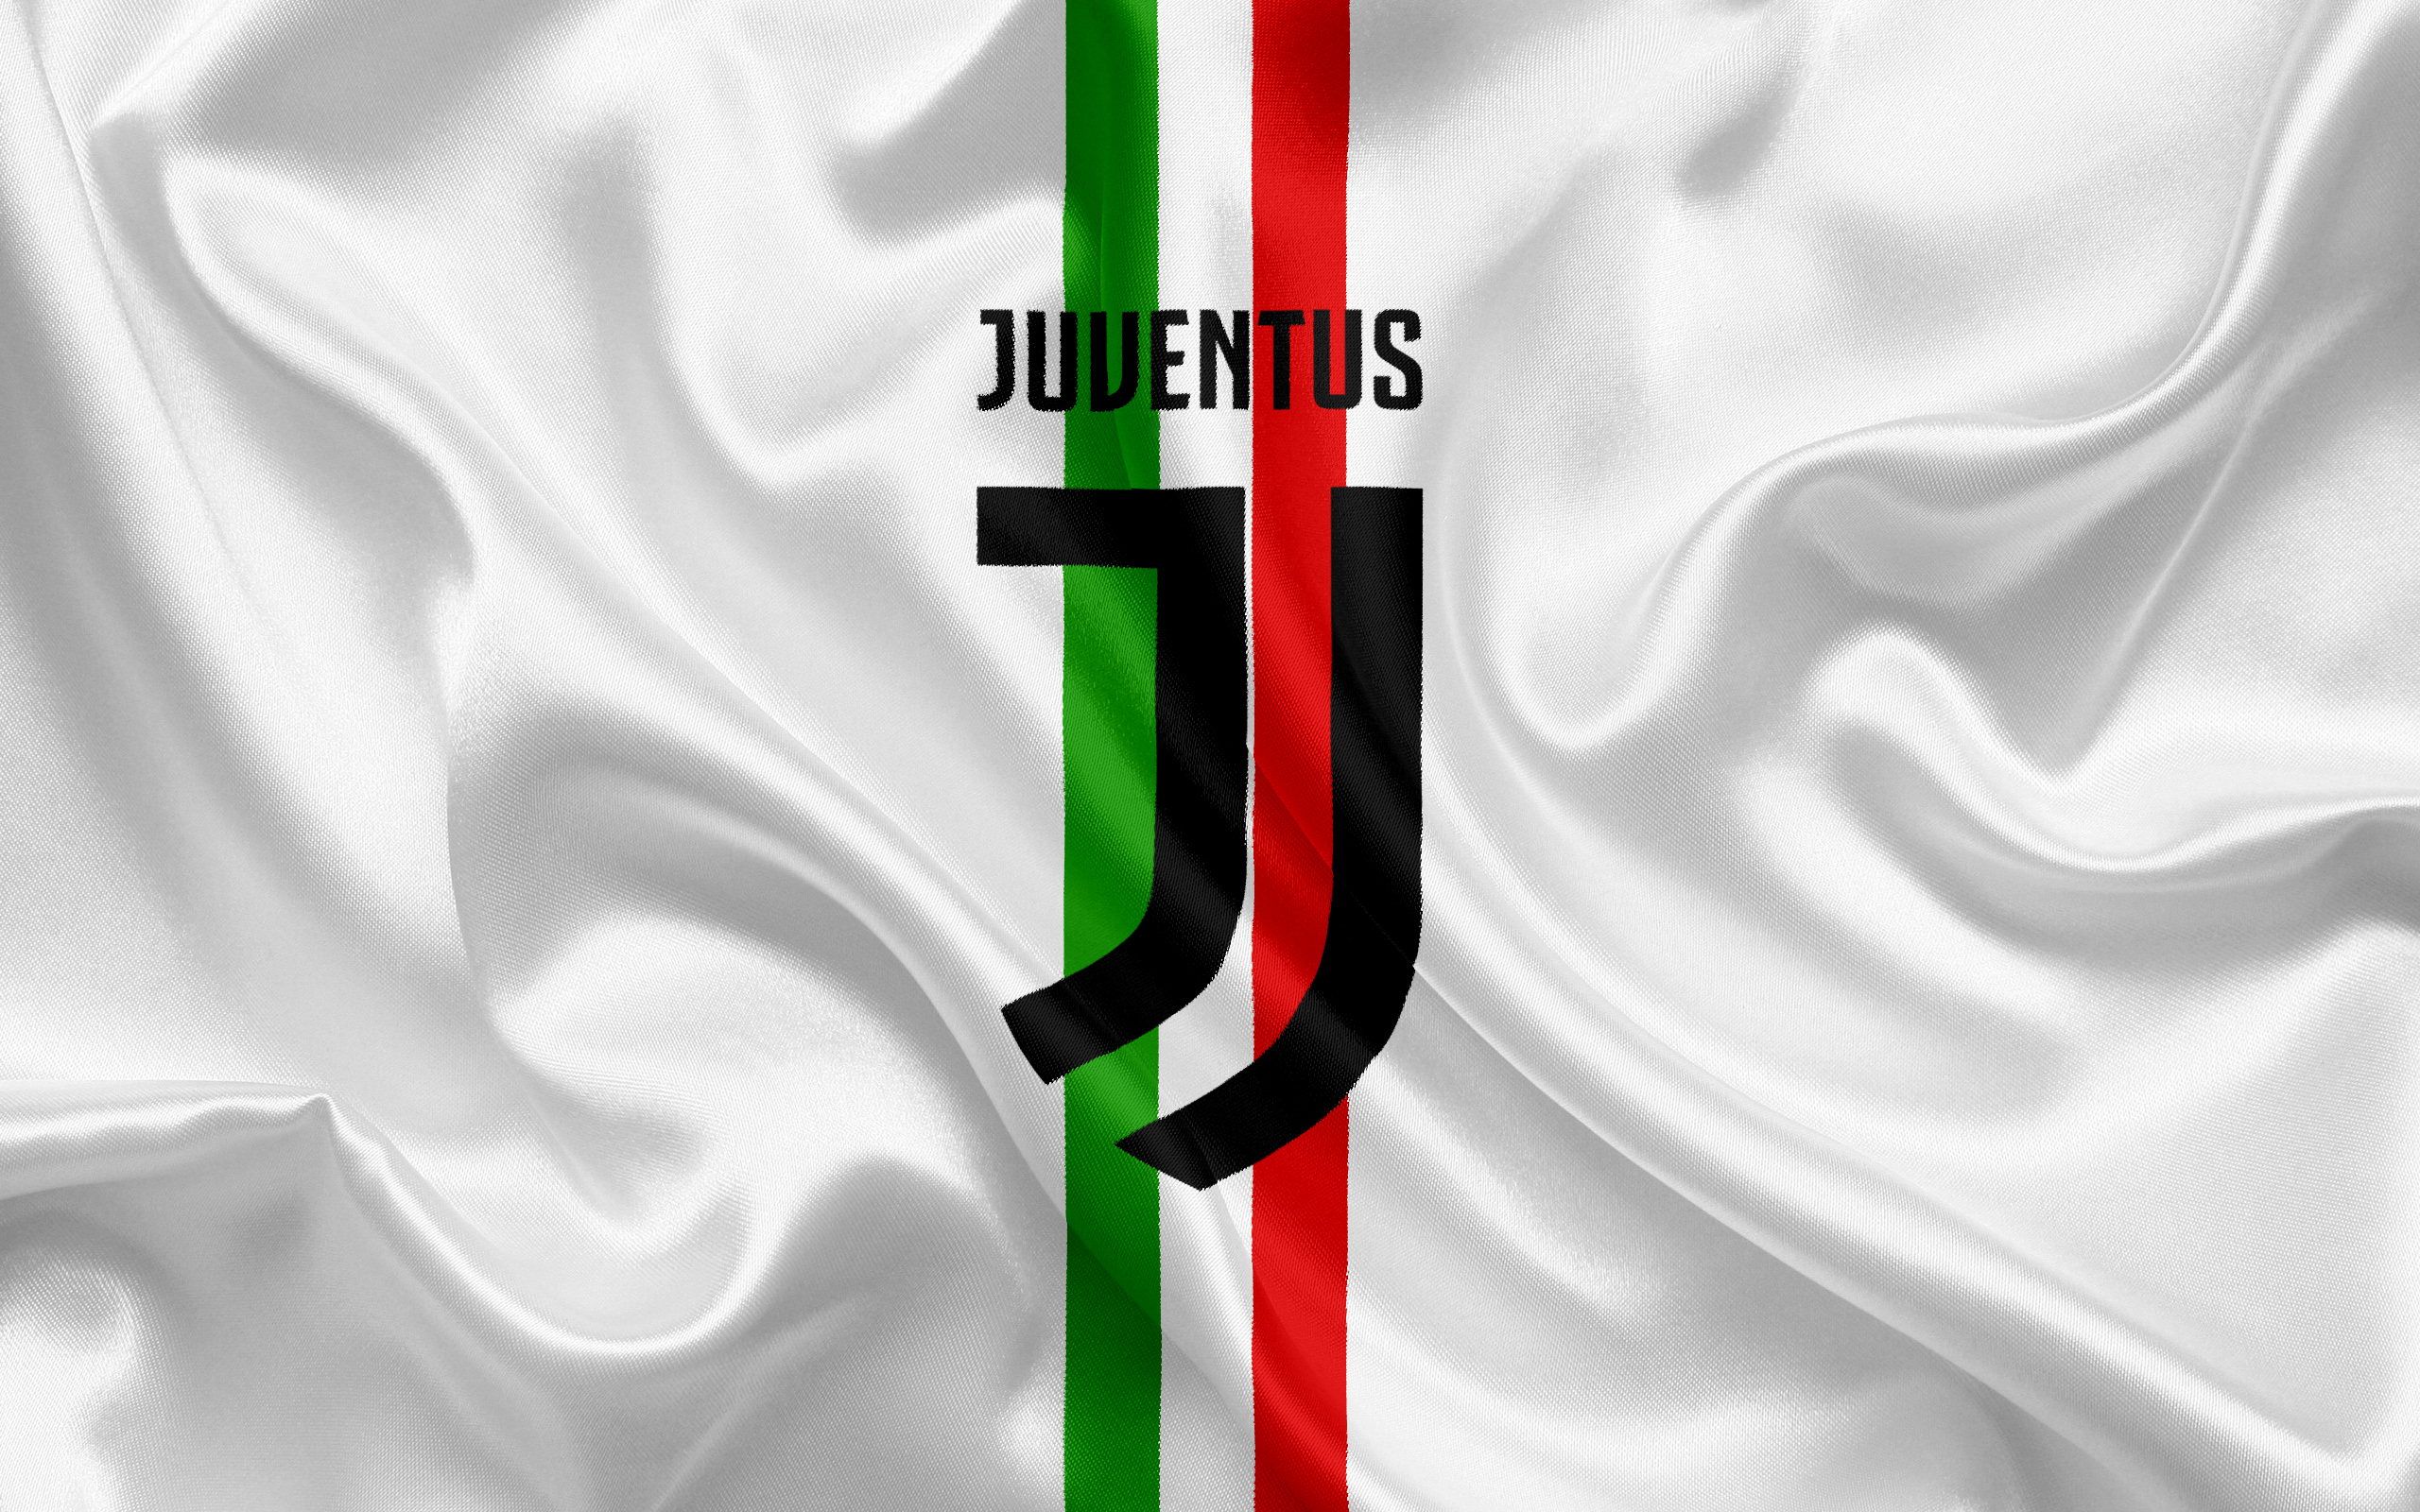 Juventus Logo Hd Wallpaper Background Image 2560x1600 Id 969834 Wallpaper Abyss